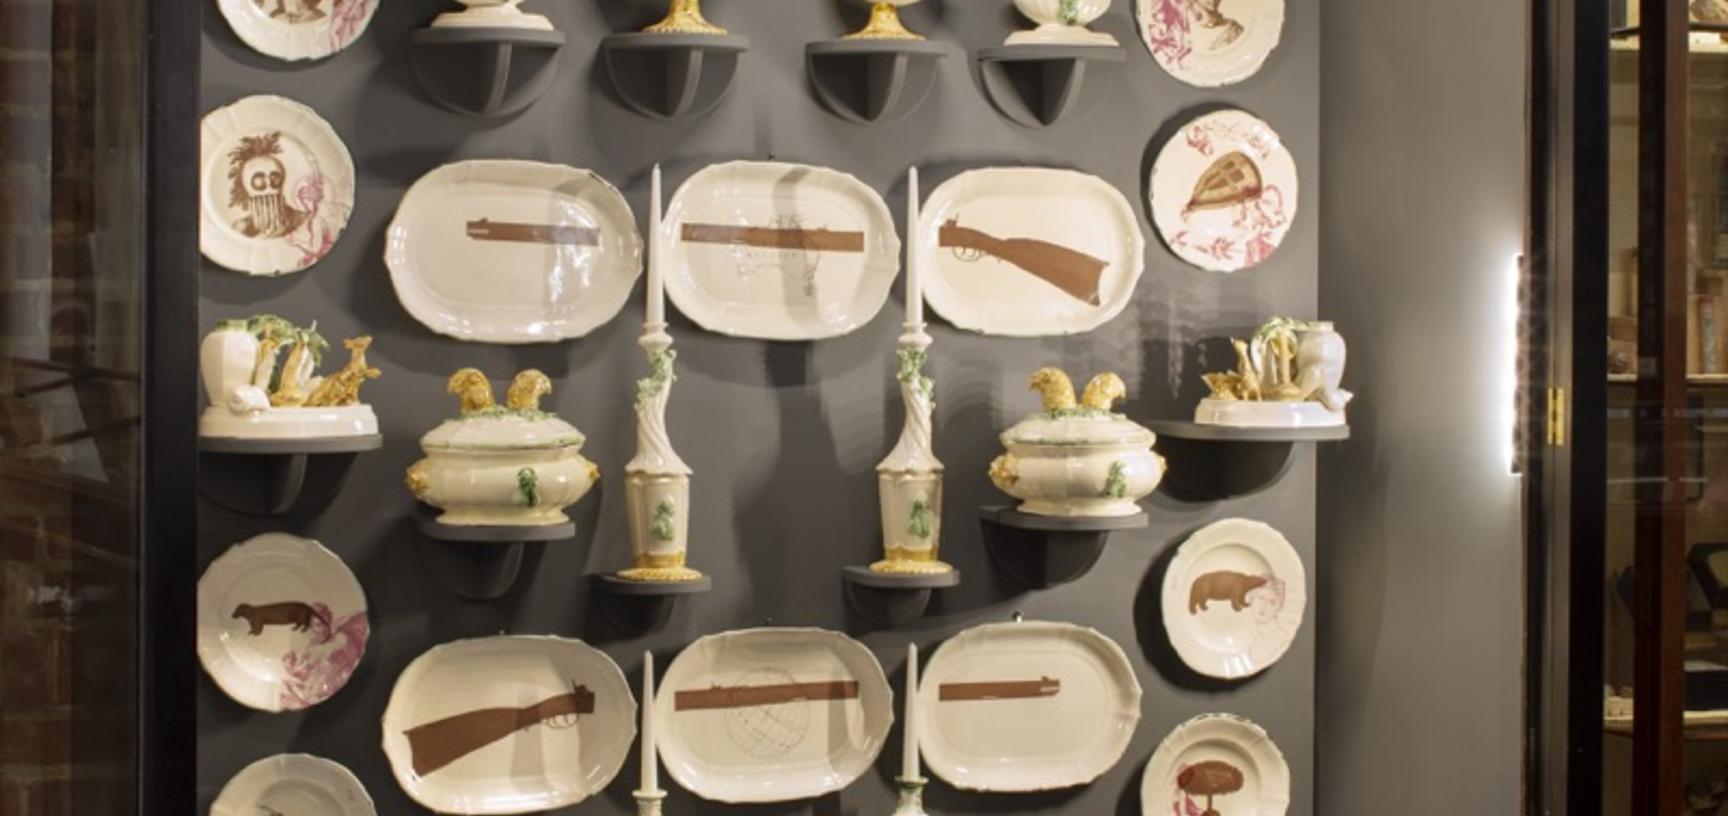 ‘The Cook Service’ by Matt Smith, display comprising part of his exhibition ‘Losing Venus’